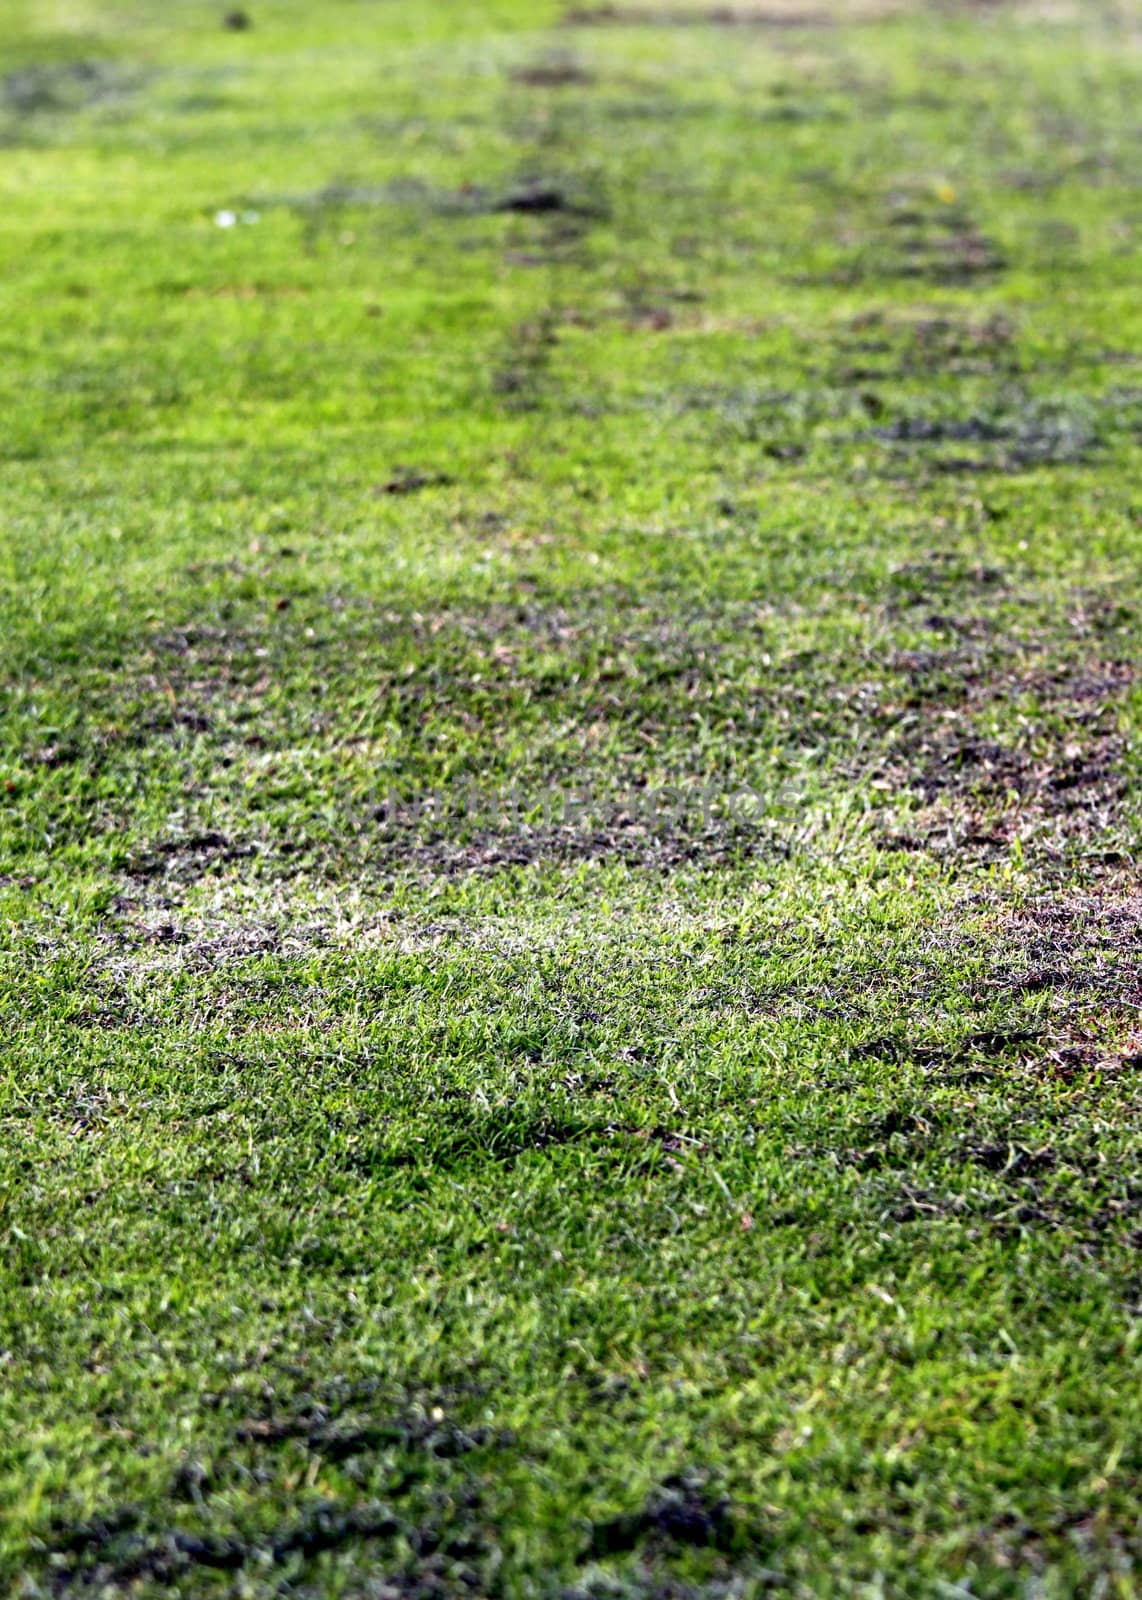 Old grunge green textured grass as background.